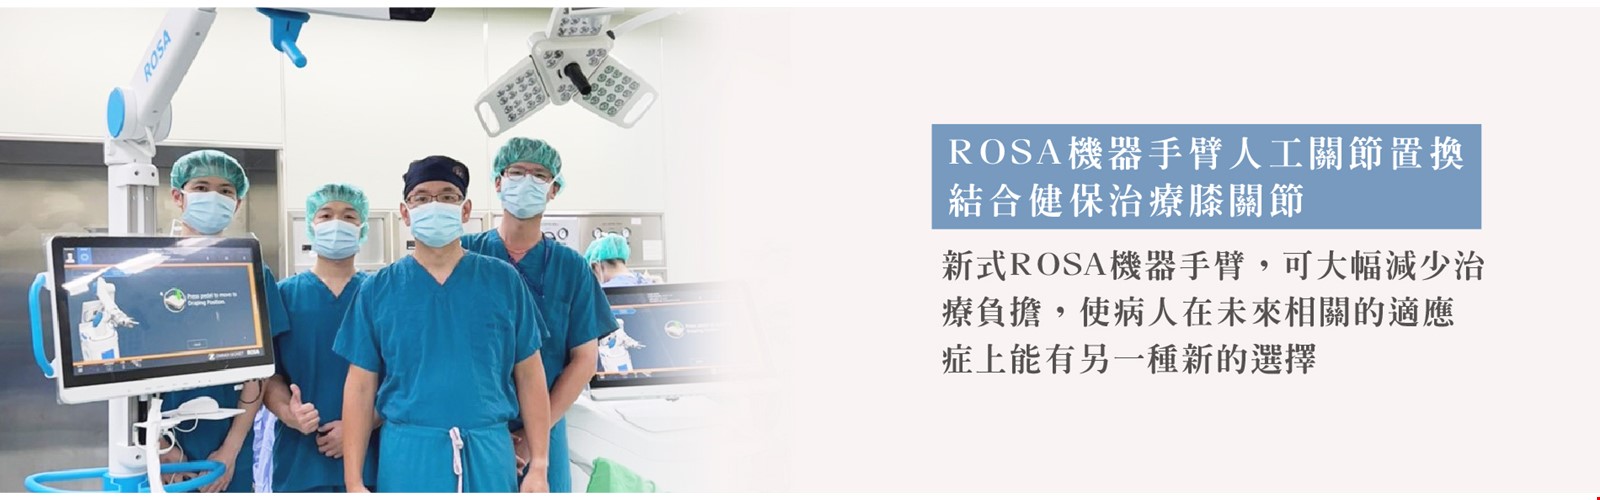 ROSA機器手臂人工關節置換 結合健保治療膝關節